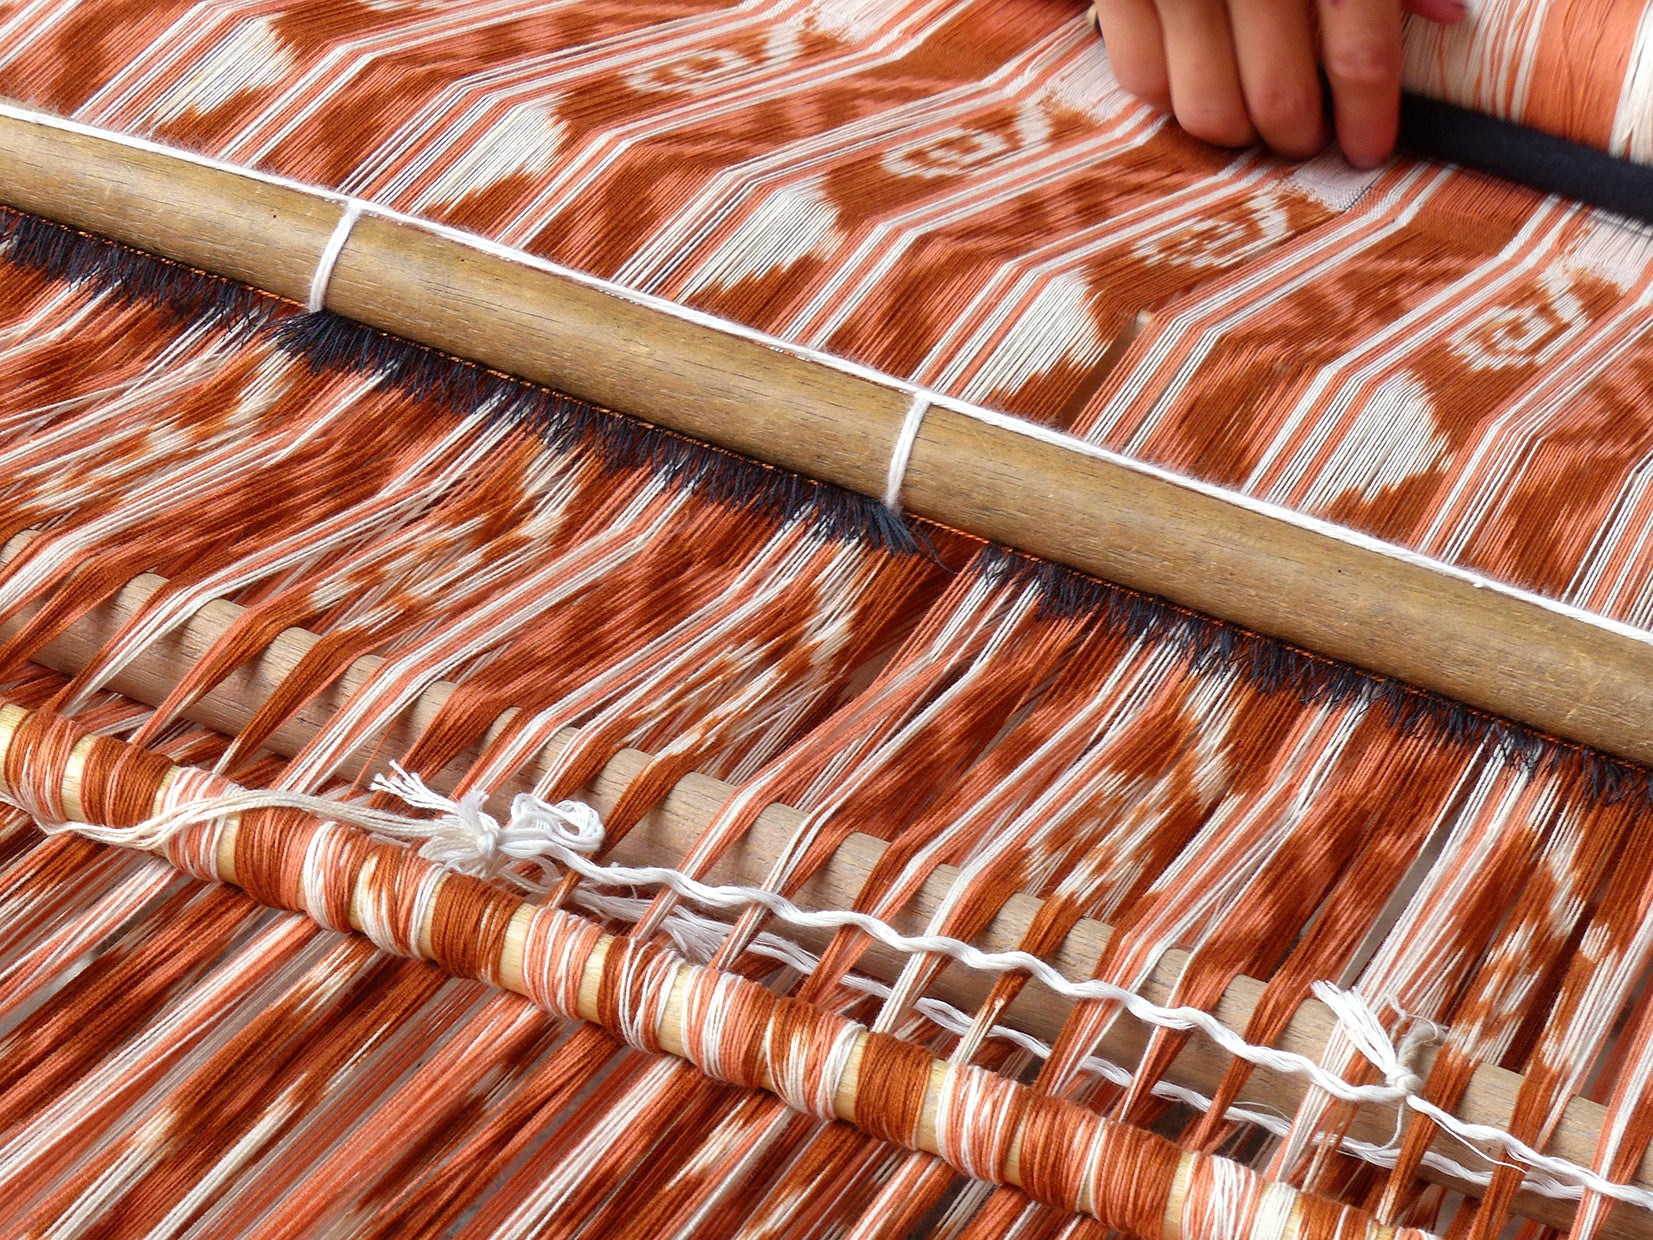 ic: Weaving ikat fabric